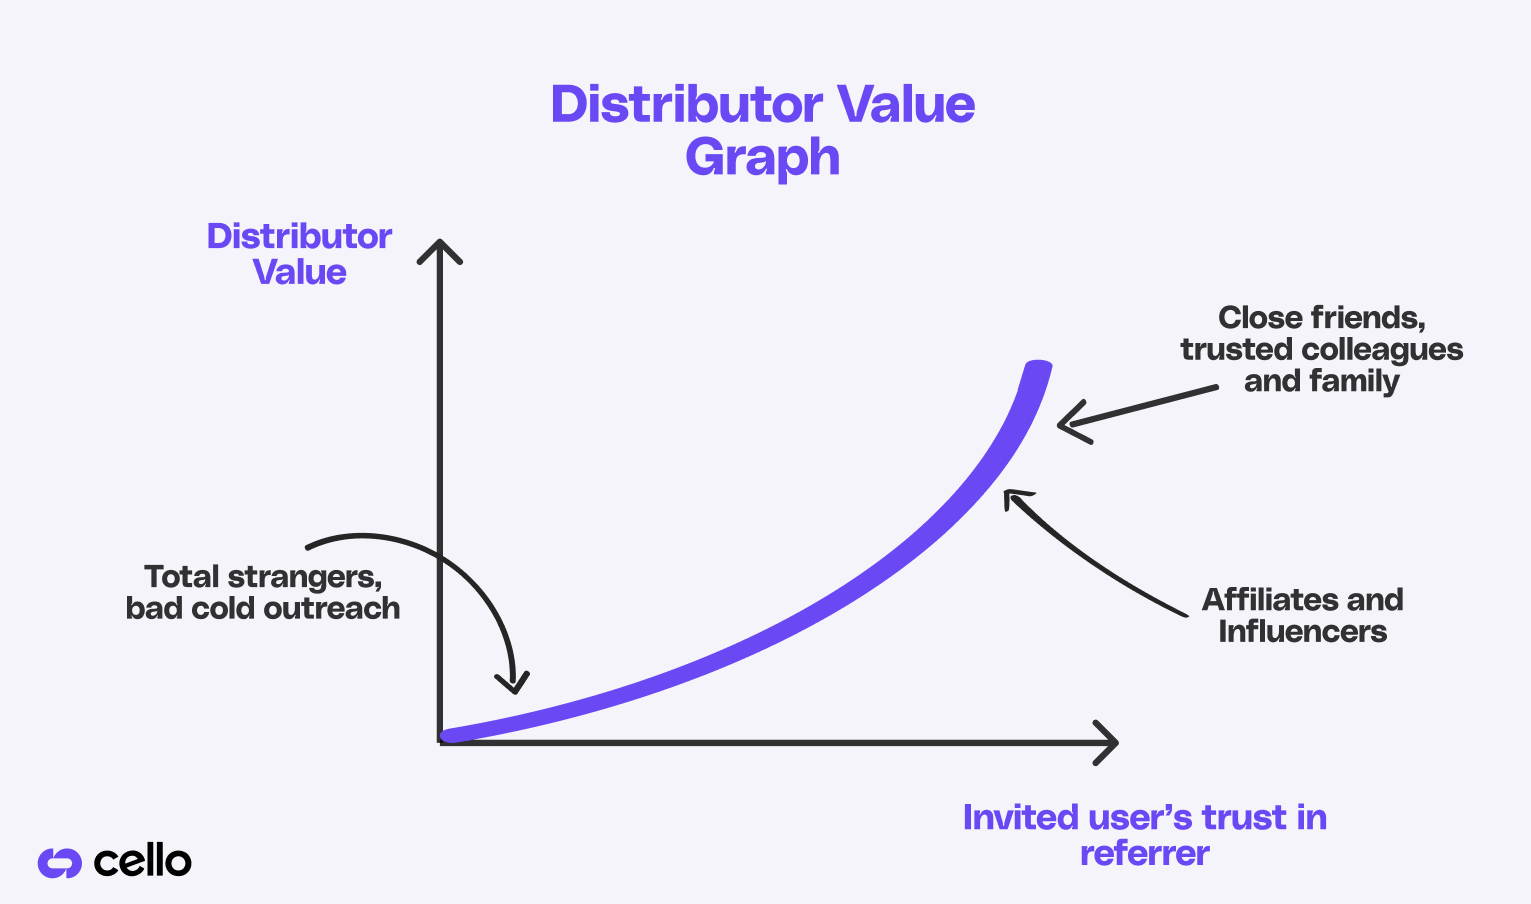 The distributor value graph